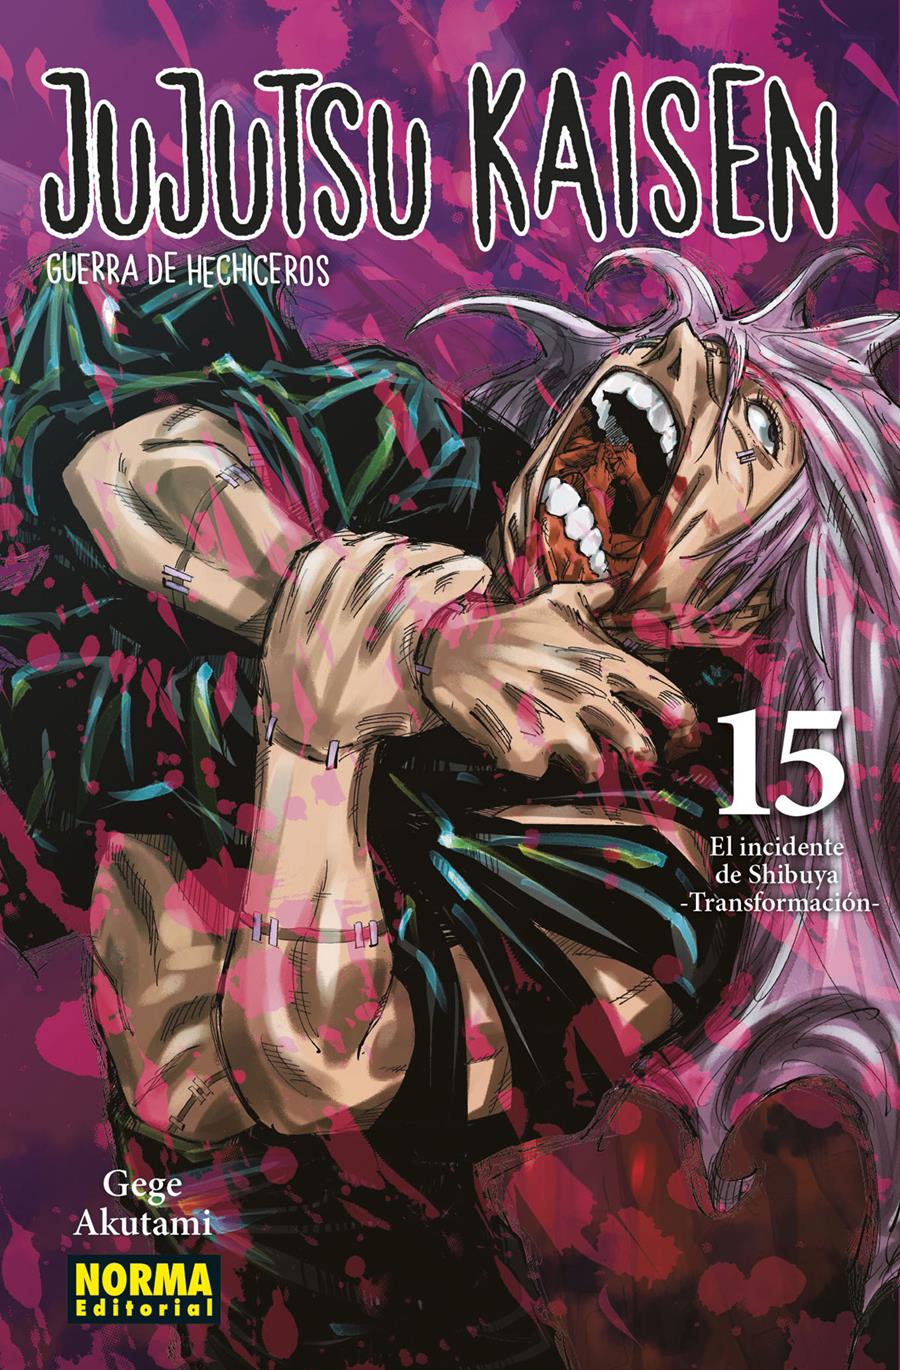 Jujutsu kaisen 15 | N0322-NOR04 | Hiro Mashima | Terra de Còmic - Tu tienda de cómics online especializada en cómics, manga y merchandising